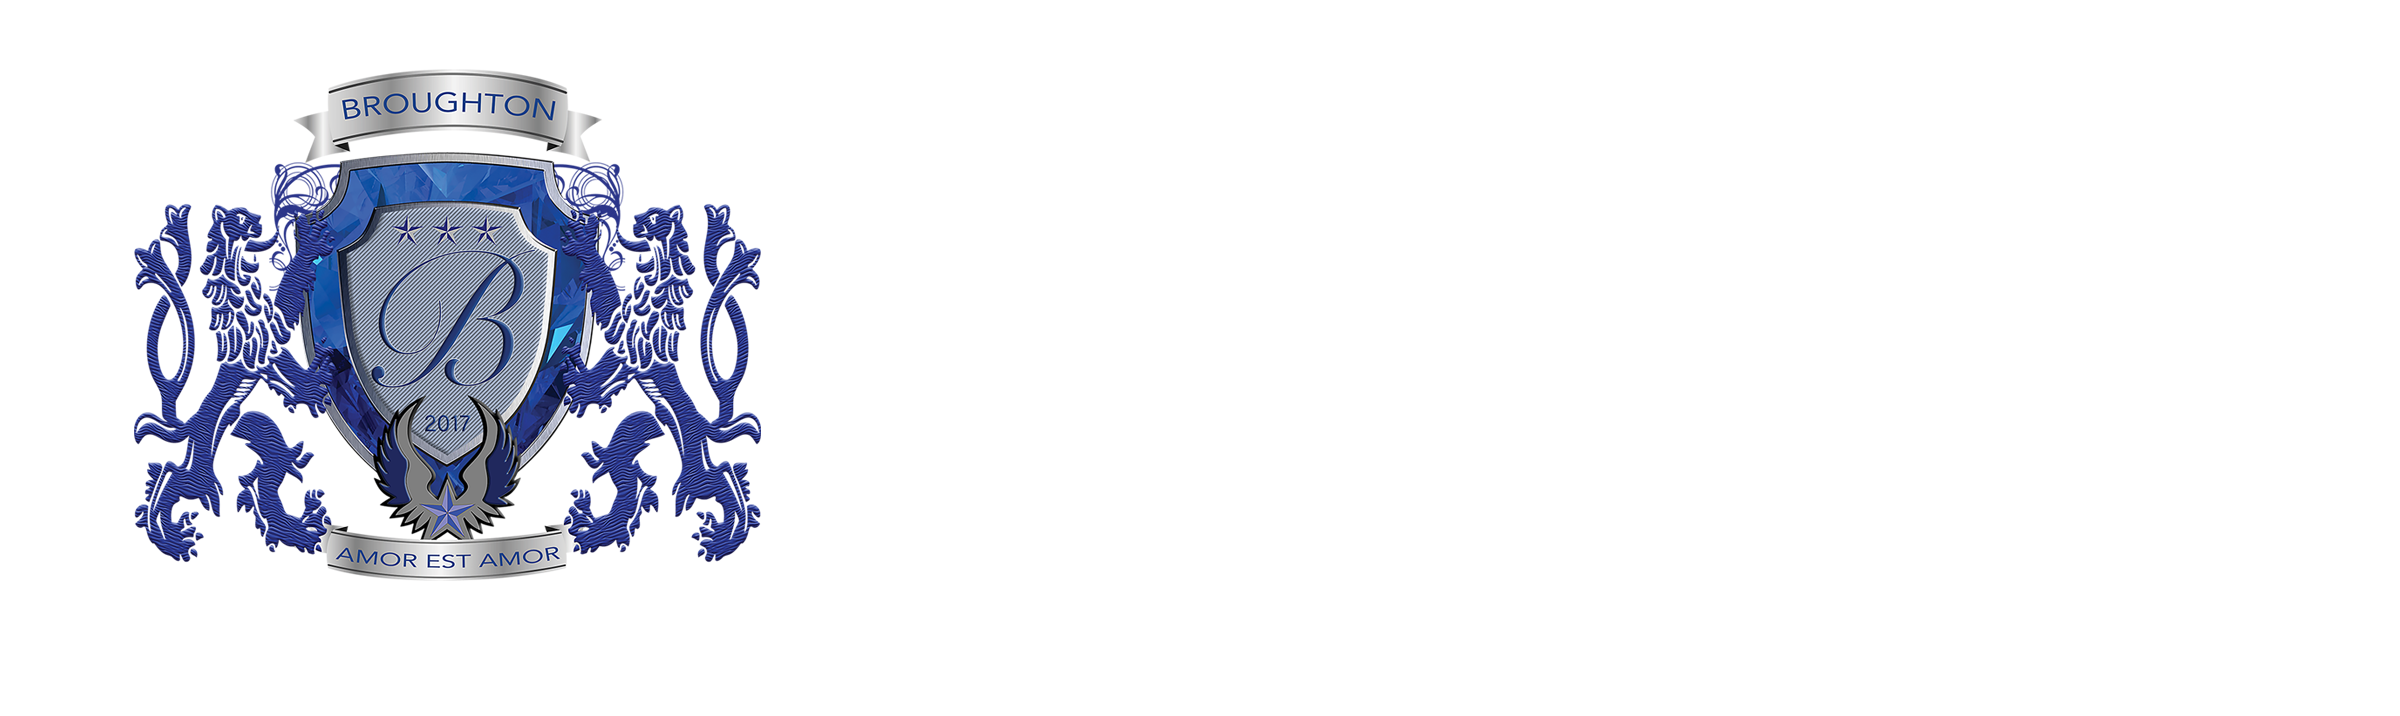 Broughton Media Group, LLC.